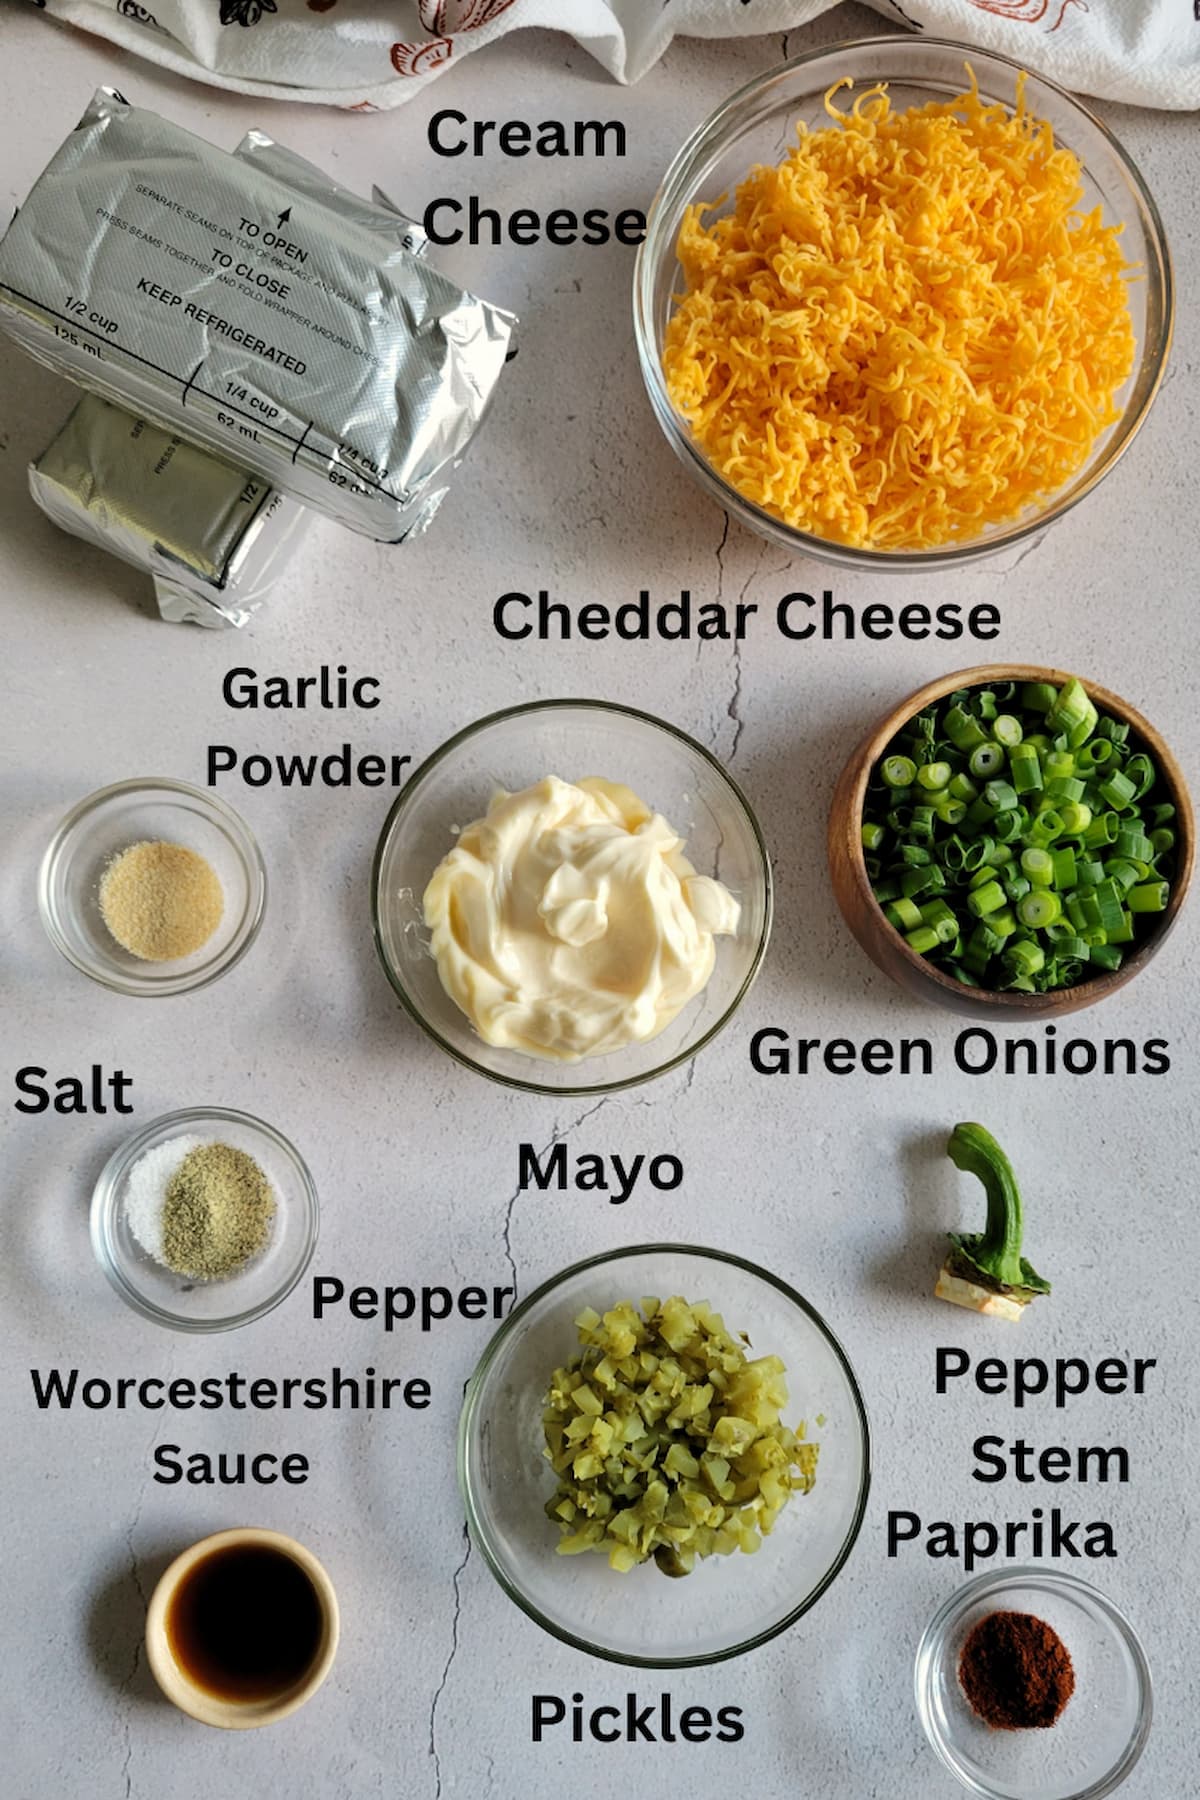 ingredients for pumpkin cheeseball - cream cheese, cheddar cheese, pickles, green onions, worcestershire sauce, paprika, garlic powder, salt, pepper, mayo, pepper stem